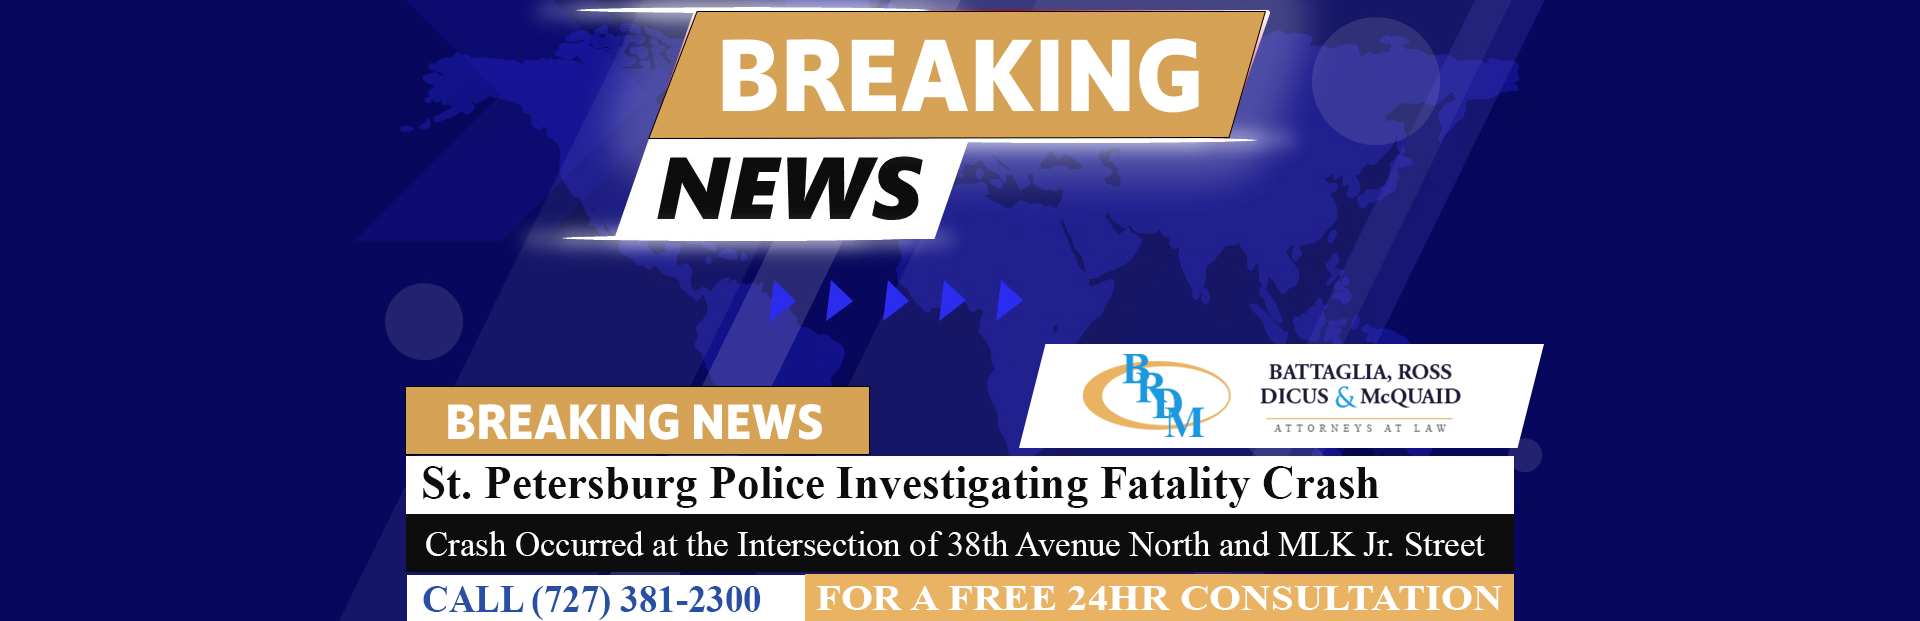 [12-13-22] St. Petersburg Police Investigating Fatality Crash